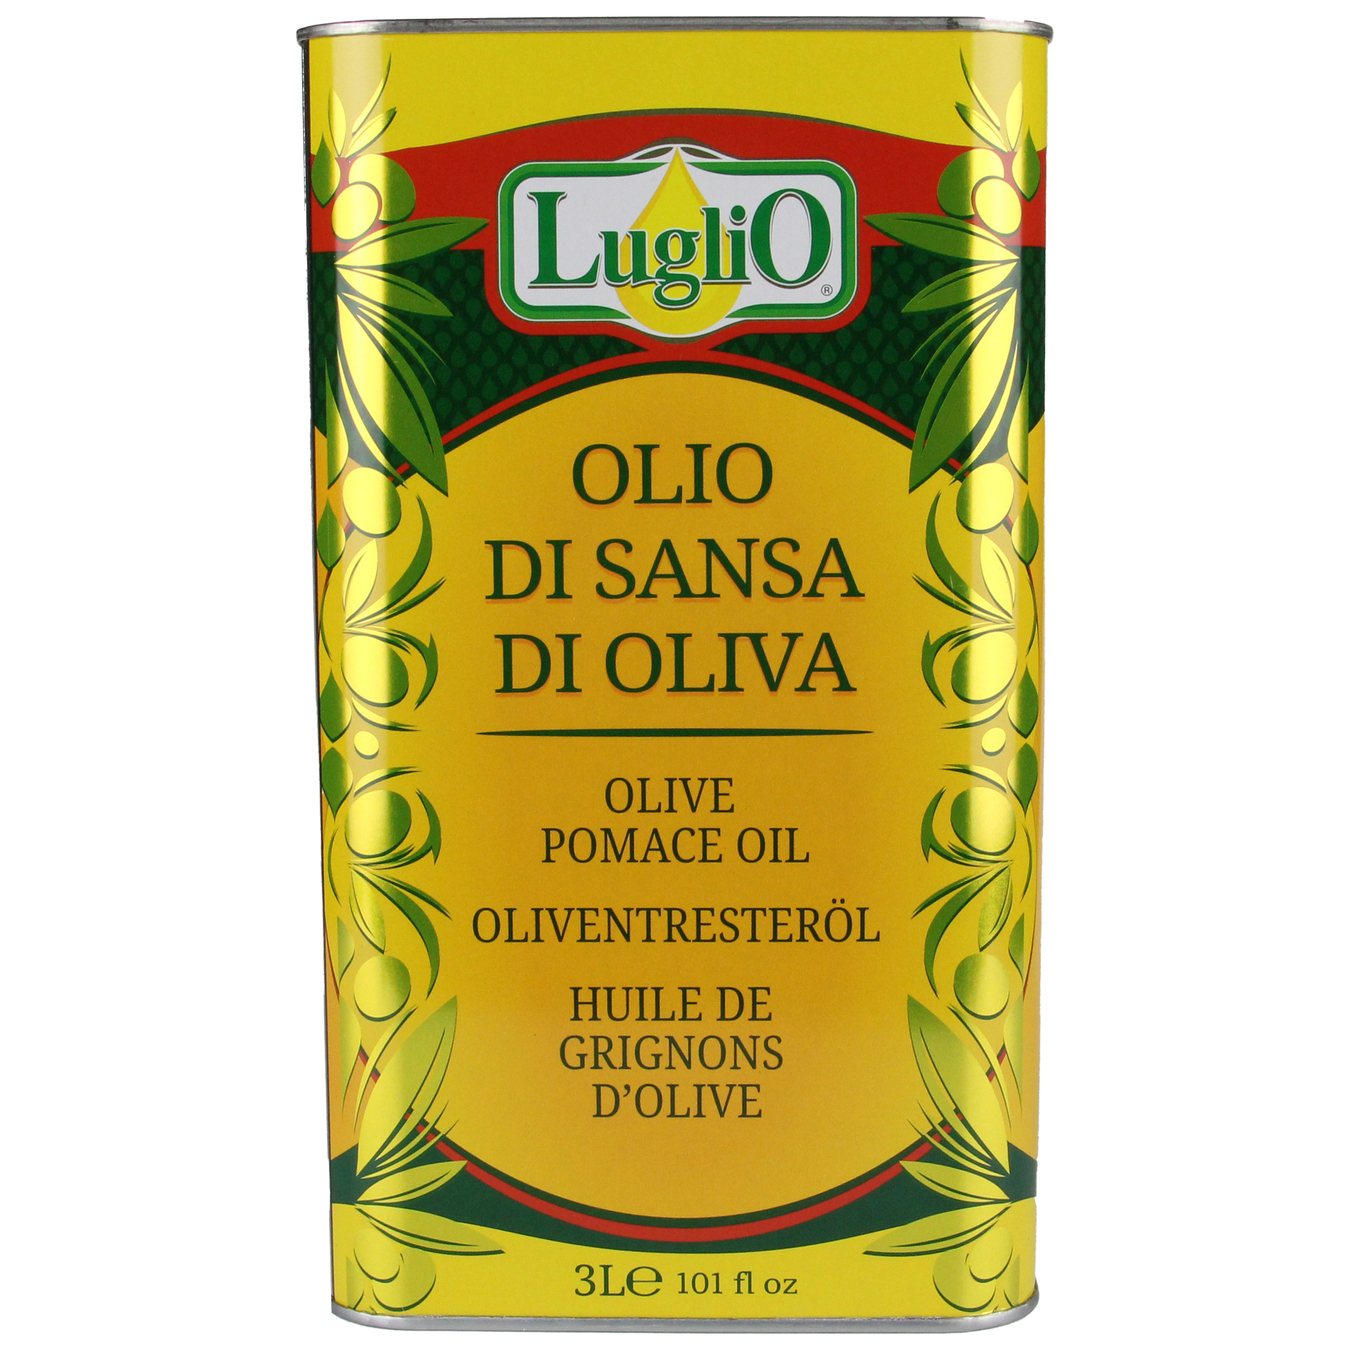 Luglio Rafinated Pomace Olive Oil 3l iron can